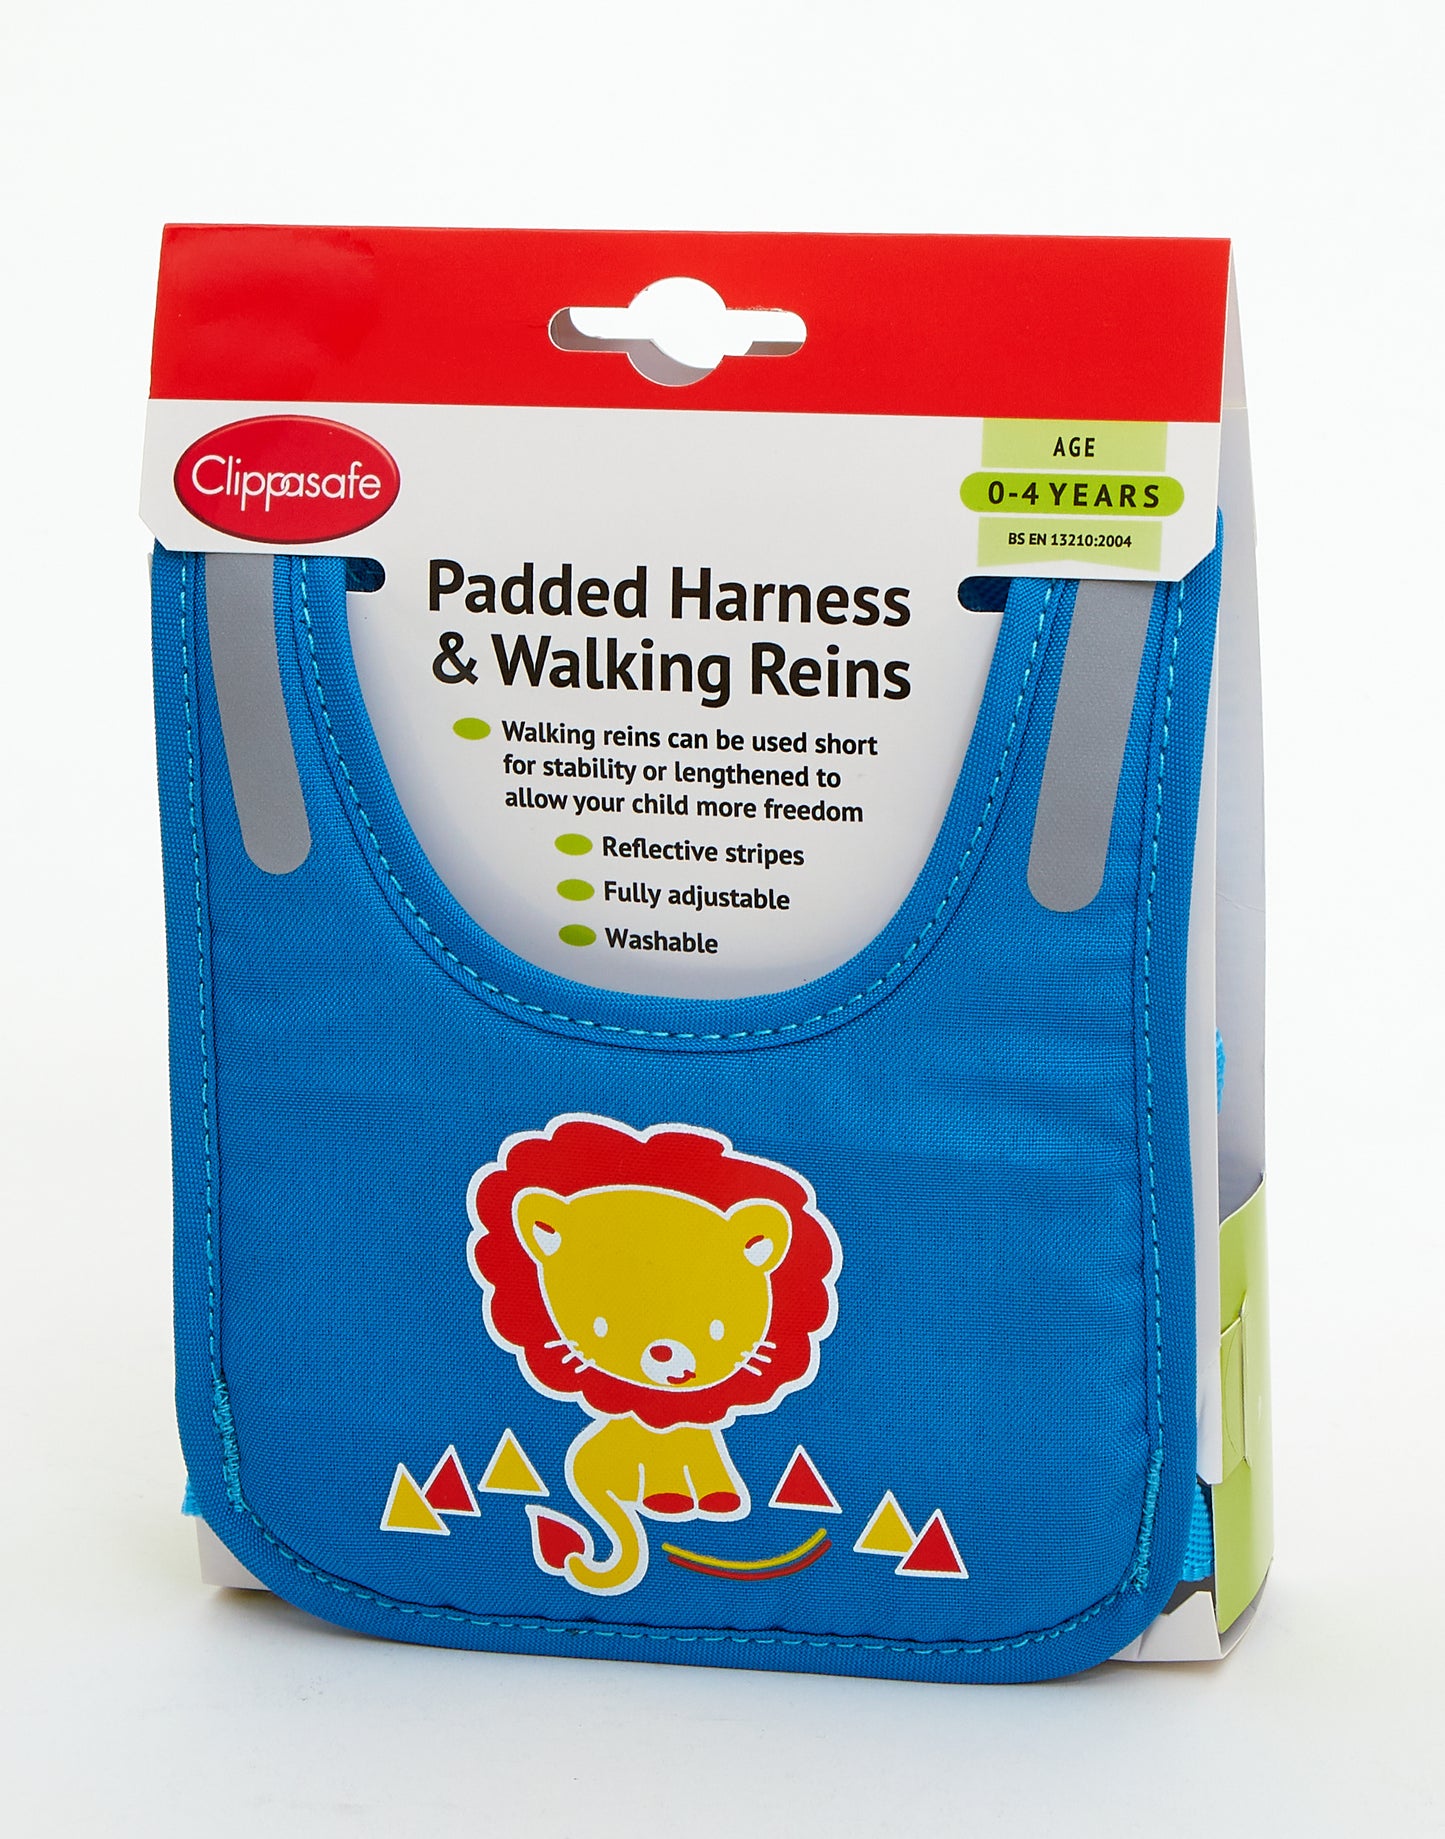 Clippasafe Padded Harness & Walking Reins